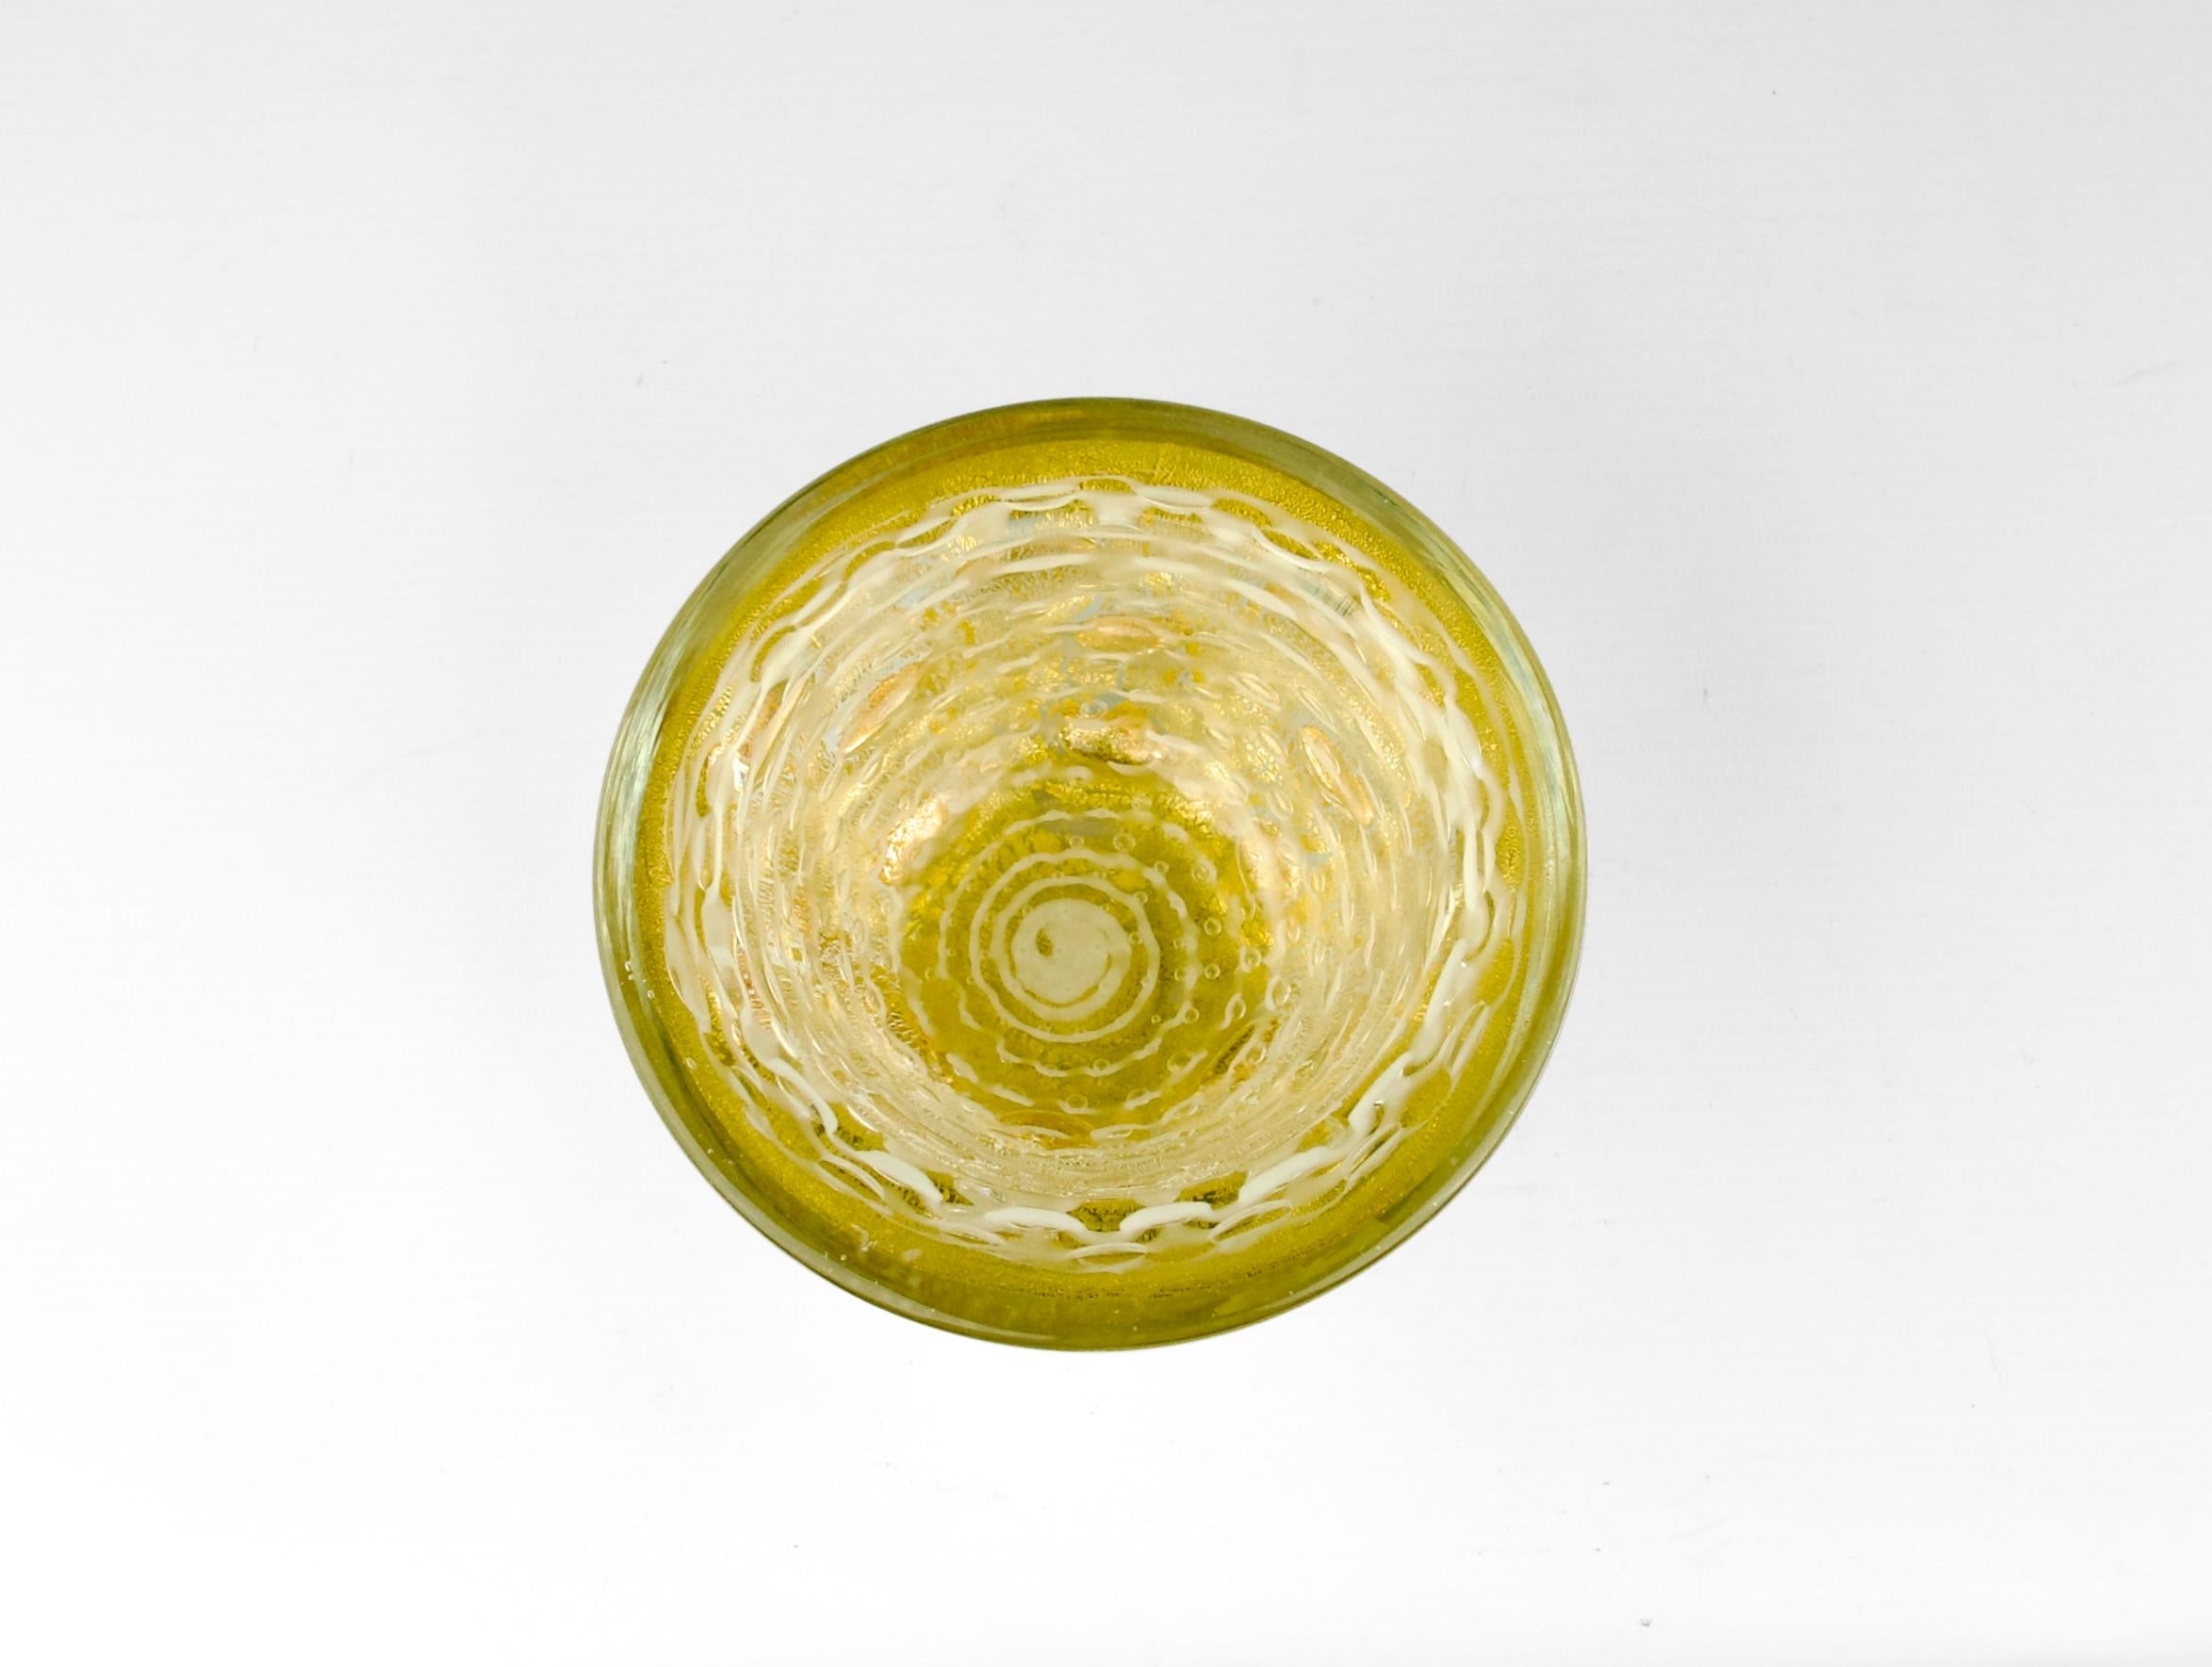 Blown Glass Barovier Toso, Bowl, Murano, 1970s